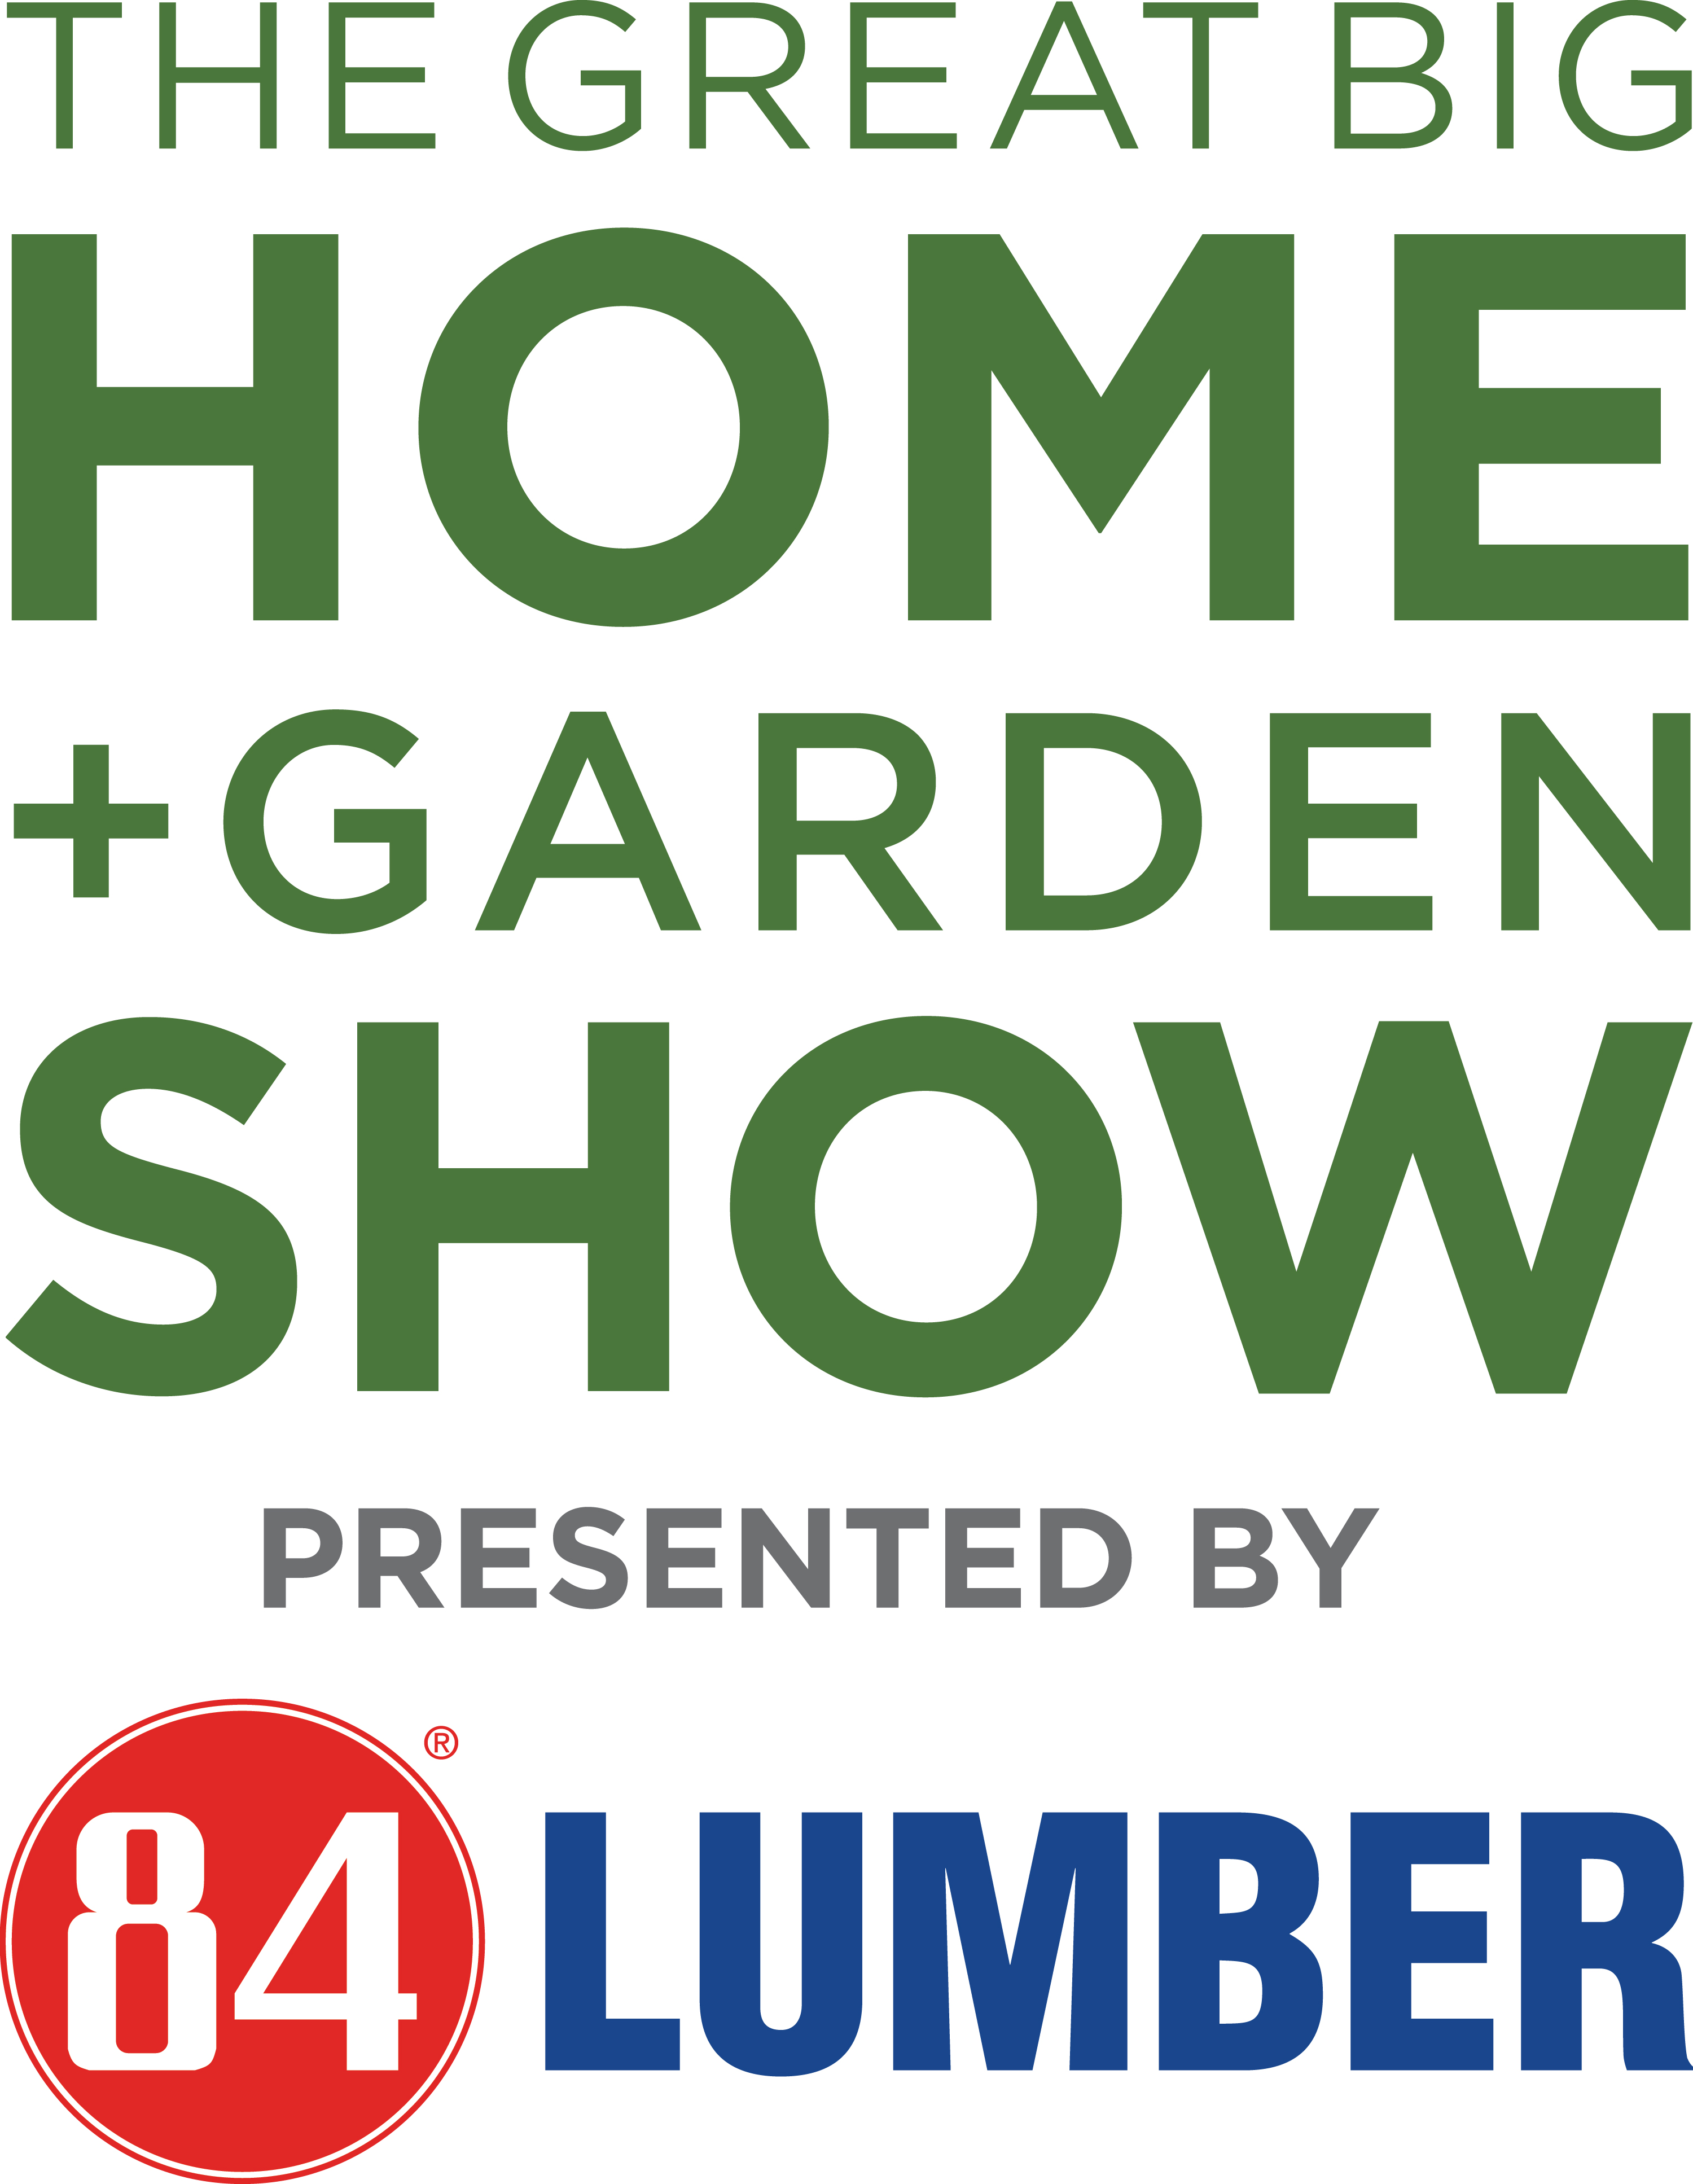 Great Big Home + Garden Show Logo